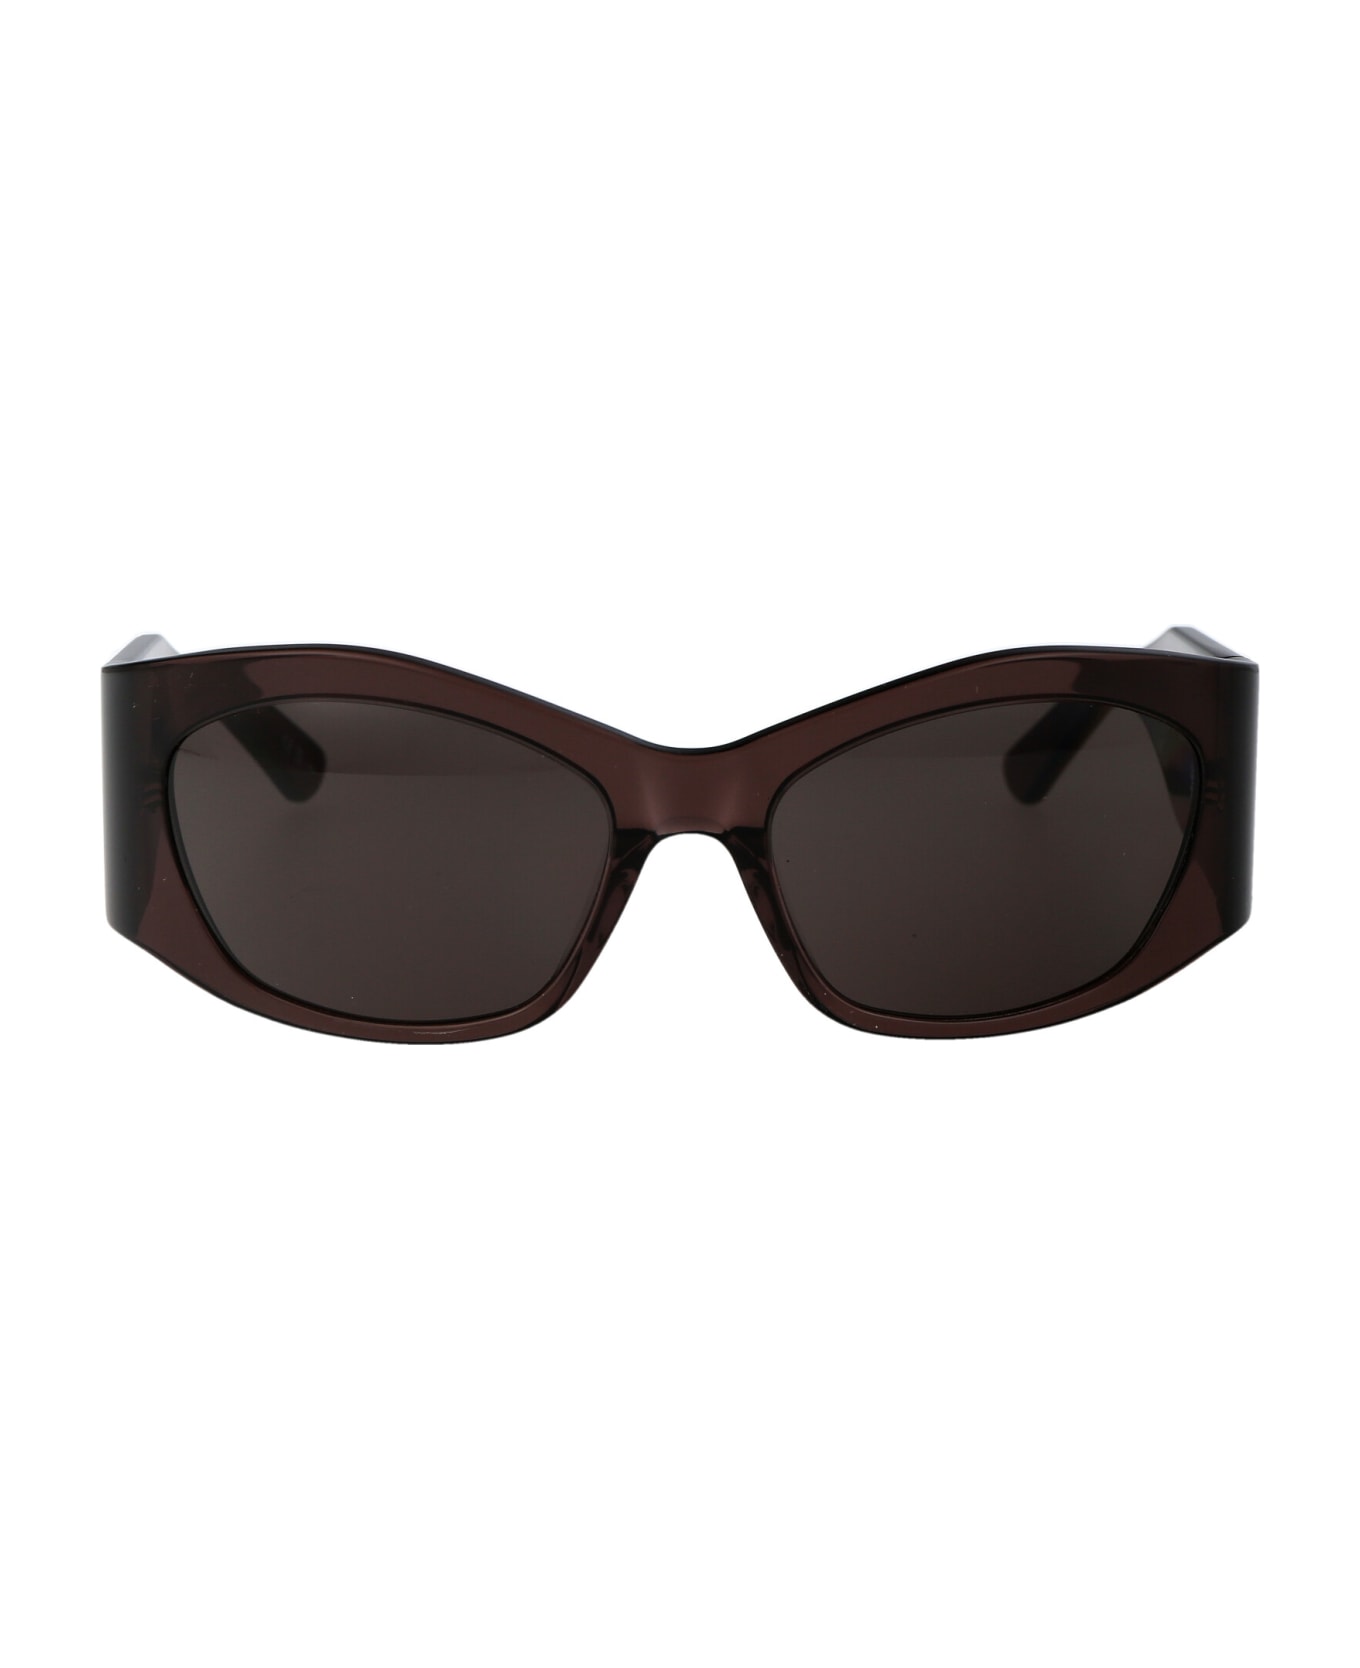 Balenciaga Eyewear Bb0329s Sunglasses - 004 BROWN BROWN GREY